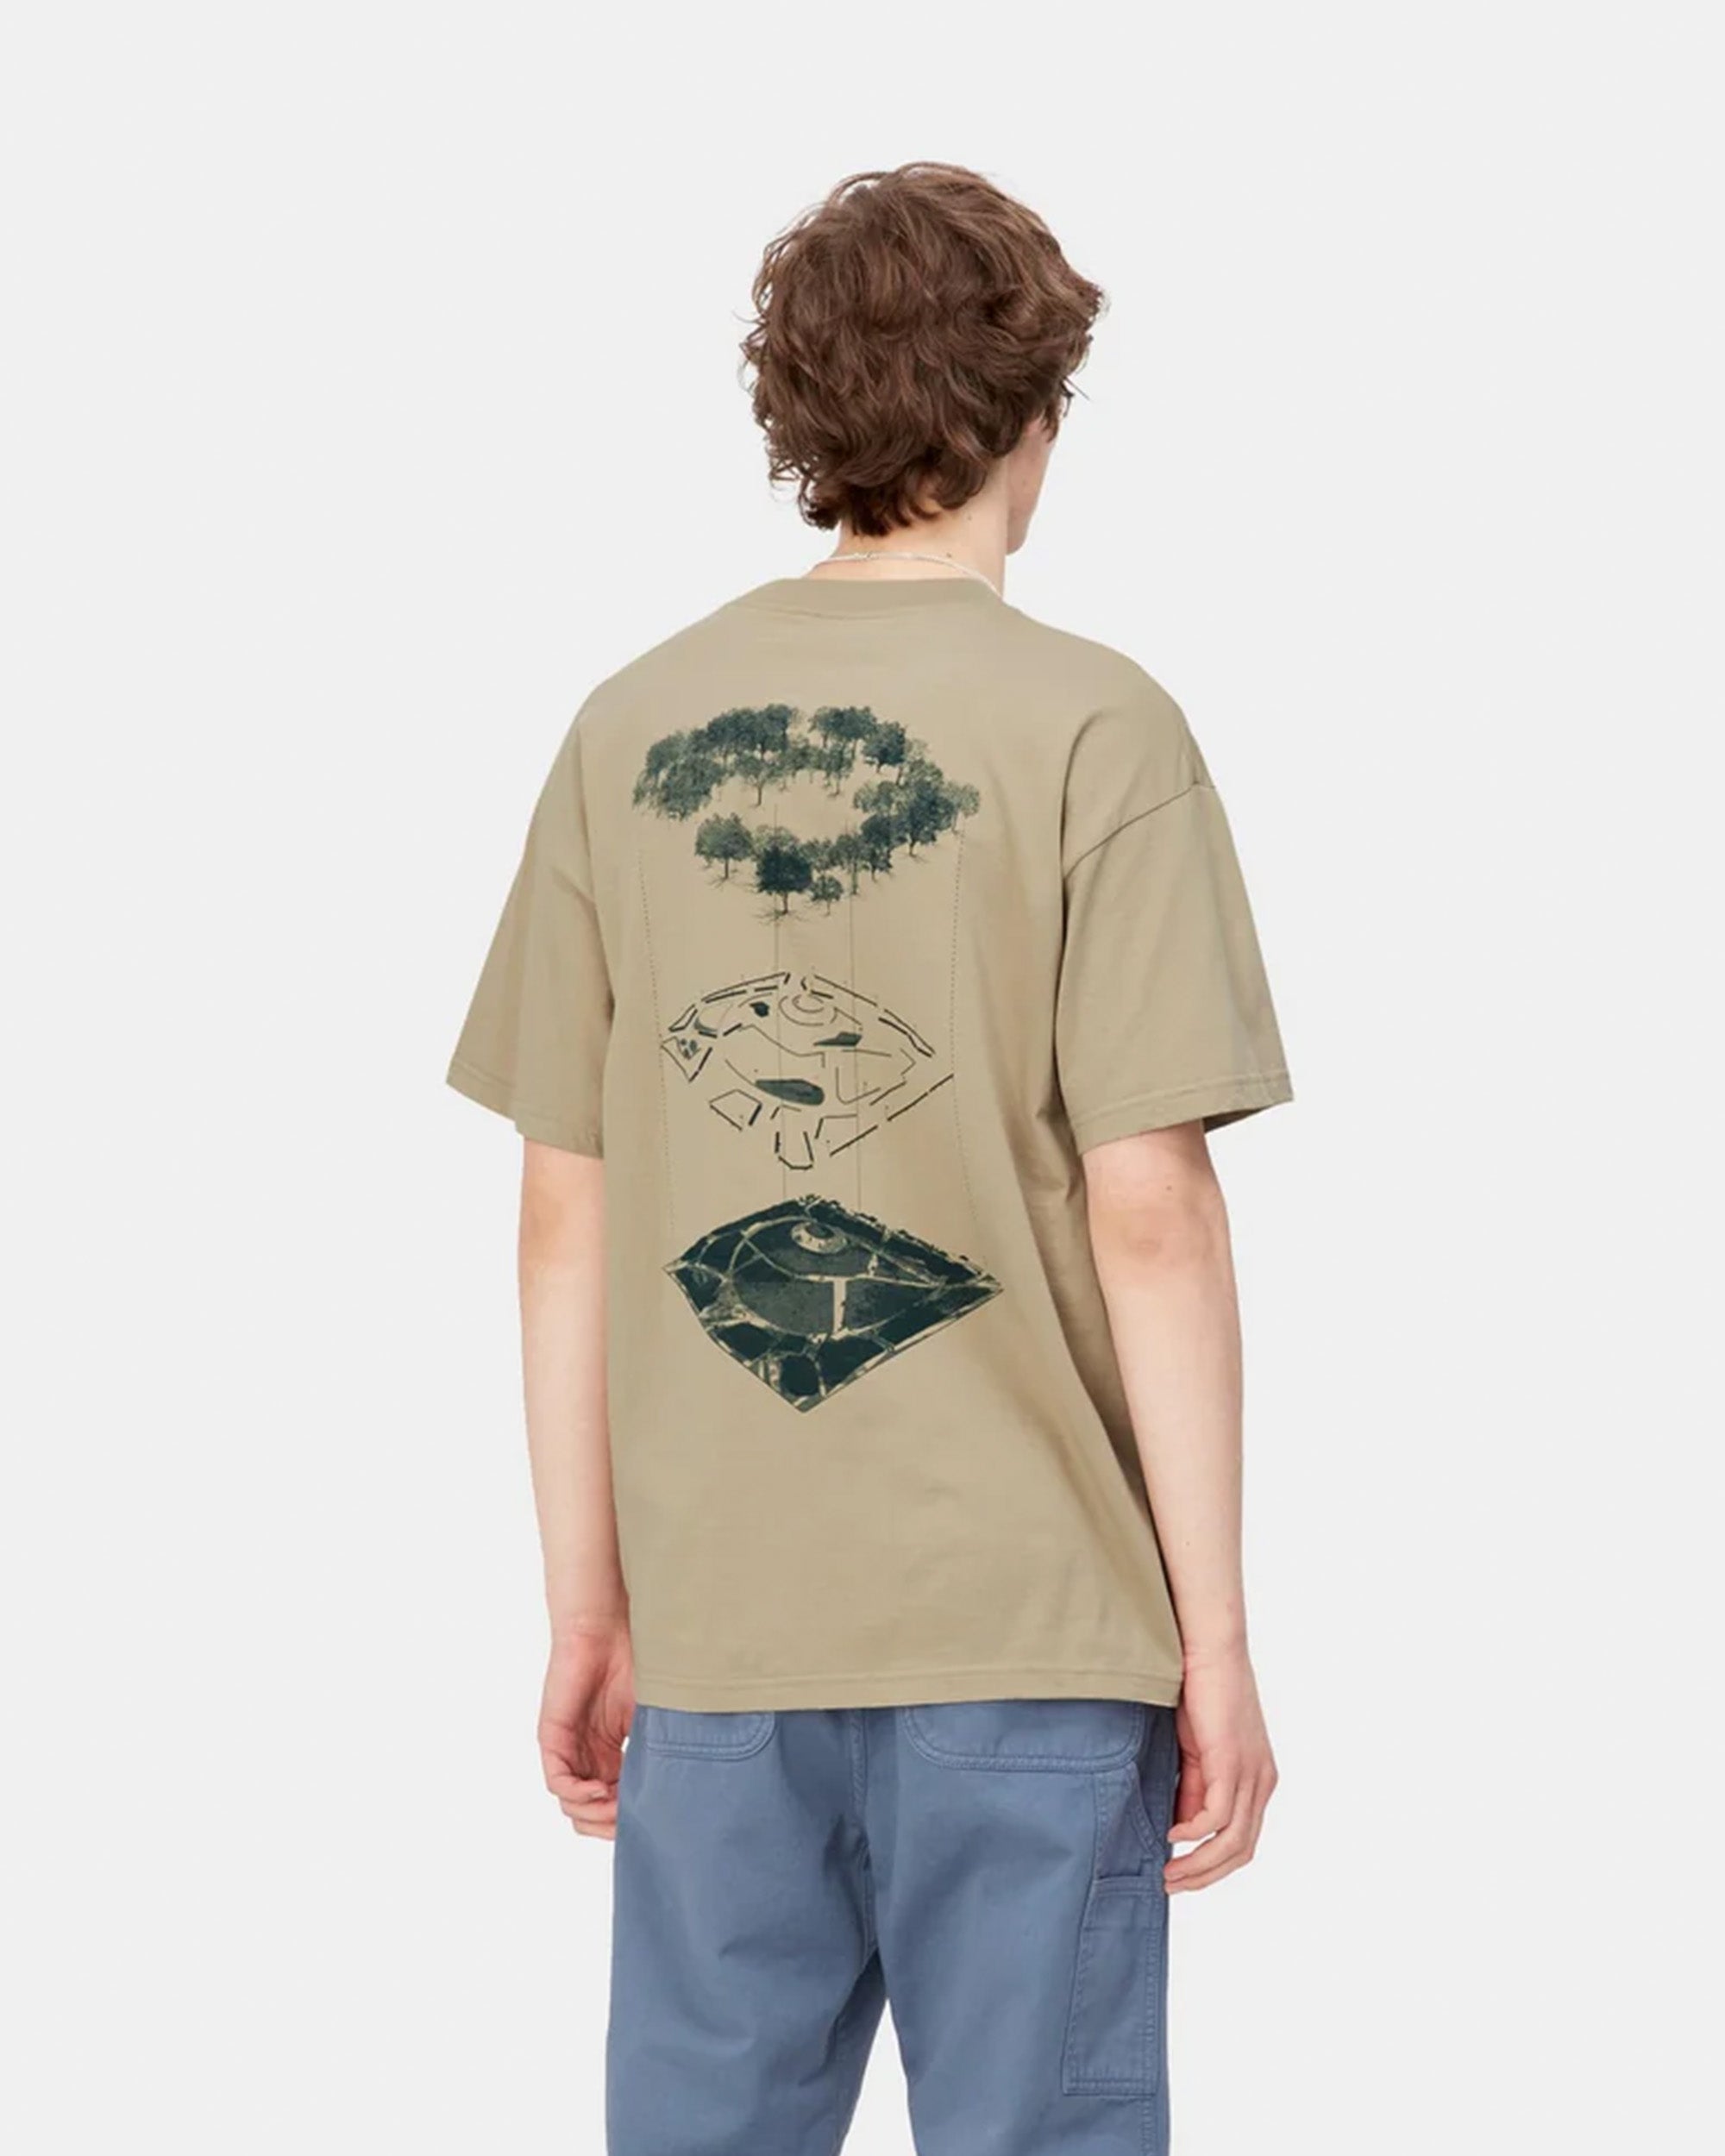 S/S Garden T-shirt - Ammonite